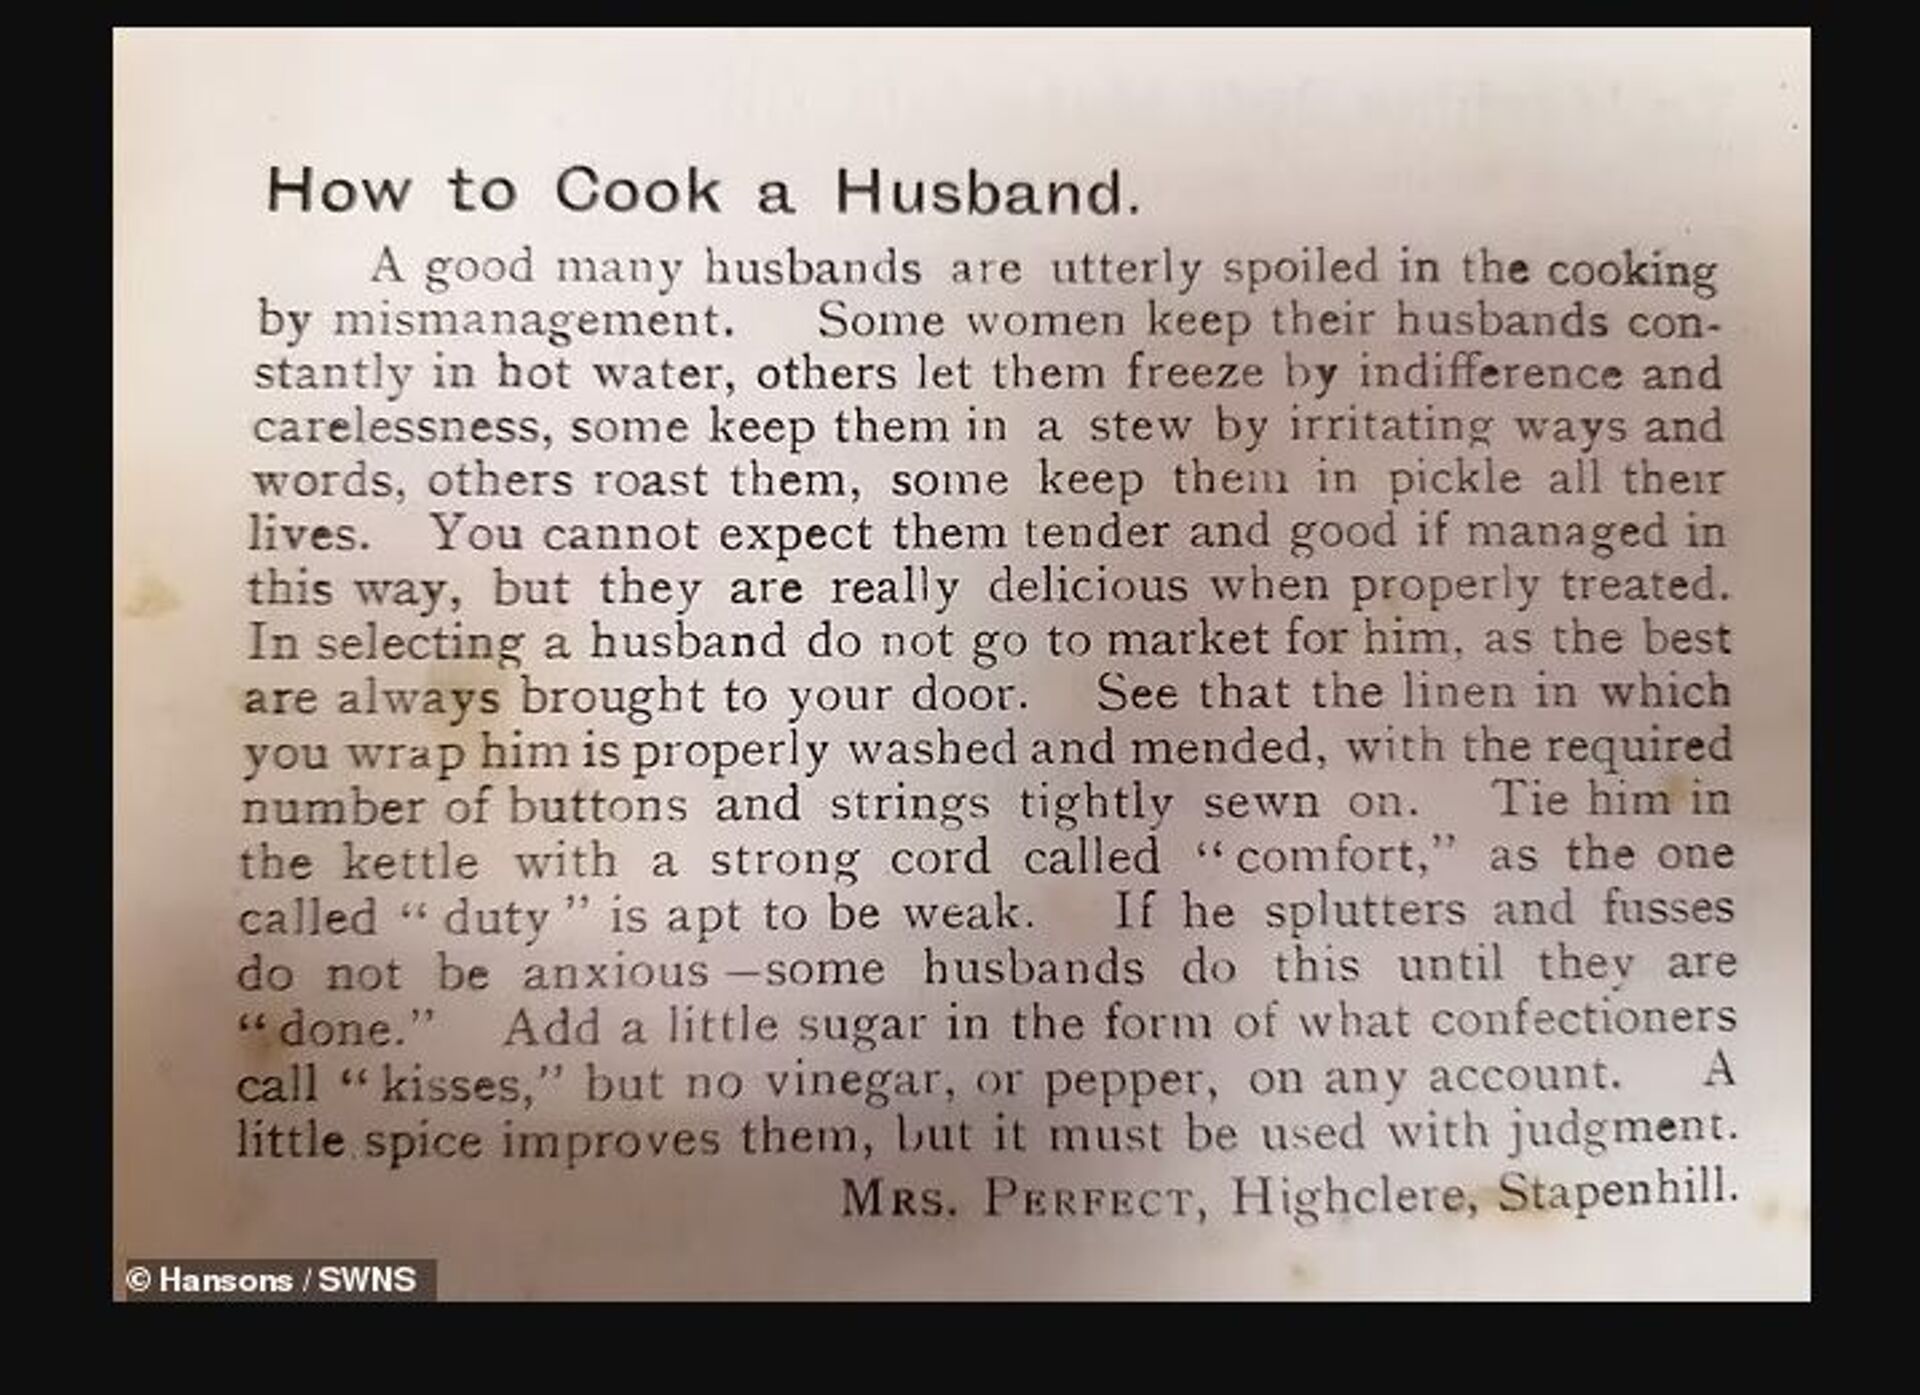  Recipe on how best to 'cook a husband' in 1911 UK cook book  - Sputnik International, 1920, 07.09.2021